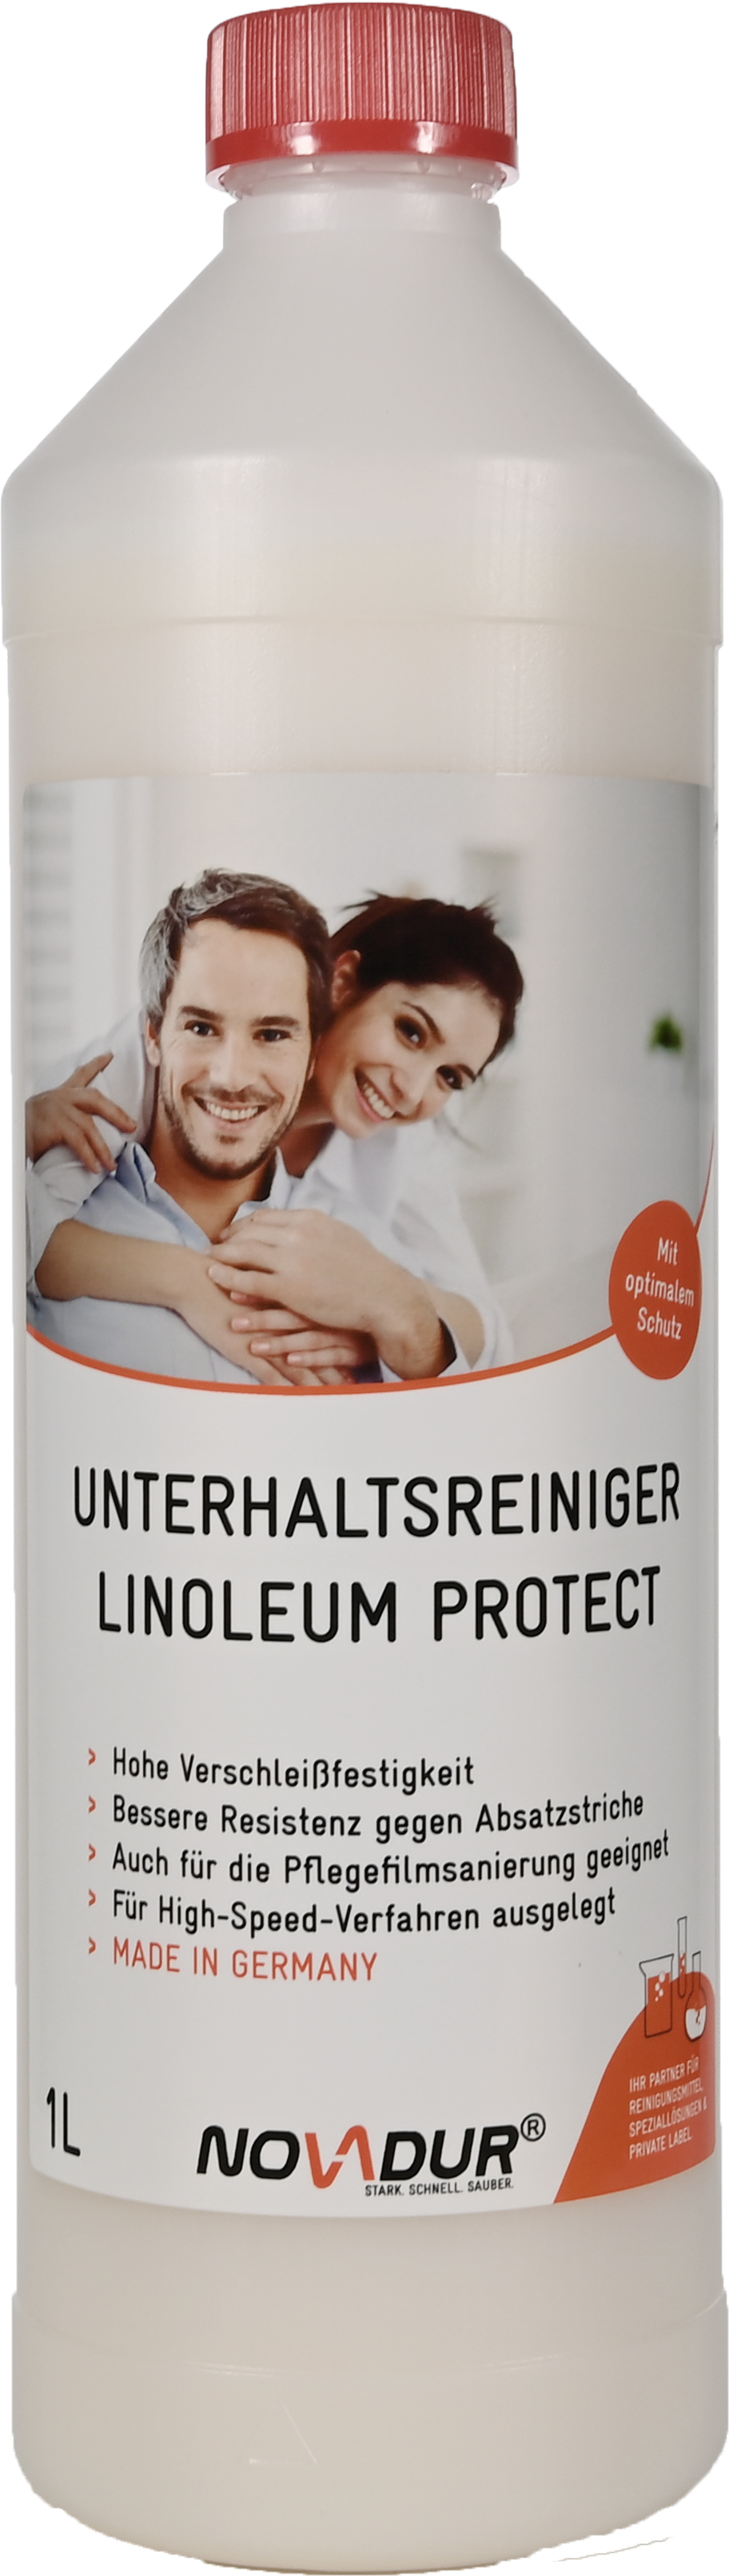 Unterhaltsreiniger Linoleum Protect